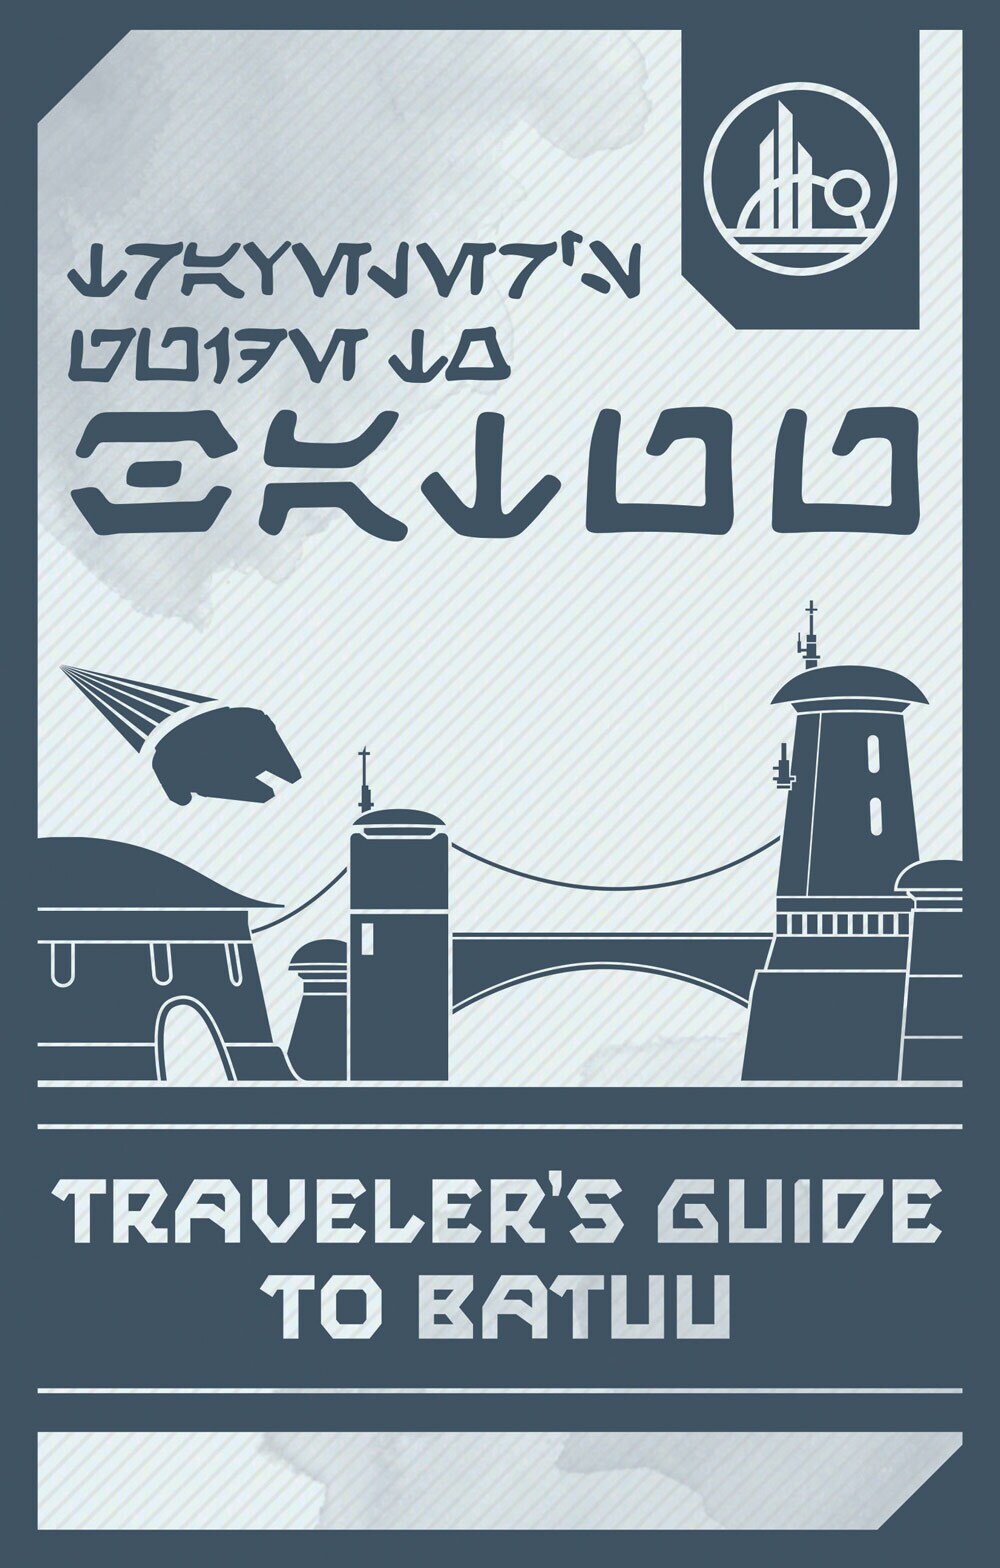 Star Wars: Galaxy’s Edge: Traveler’s Guide to Batuu cover